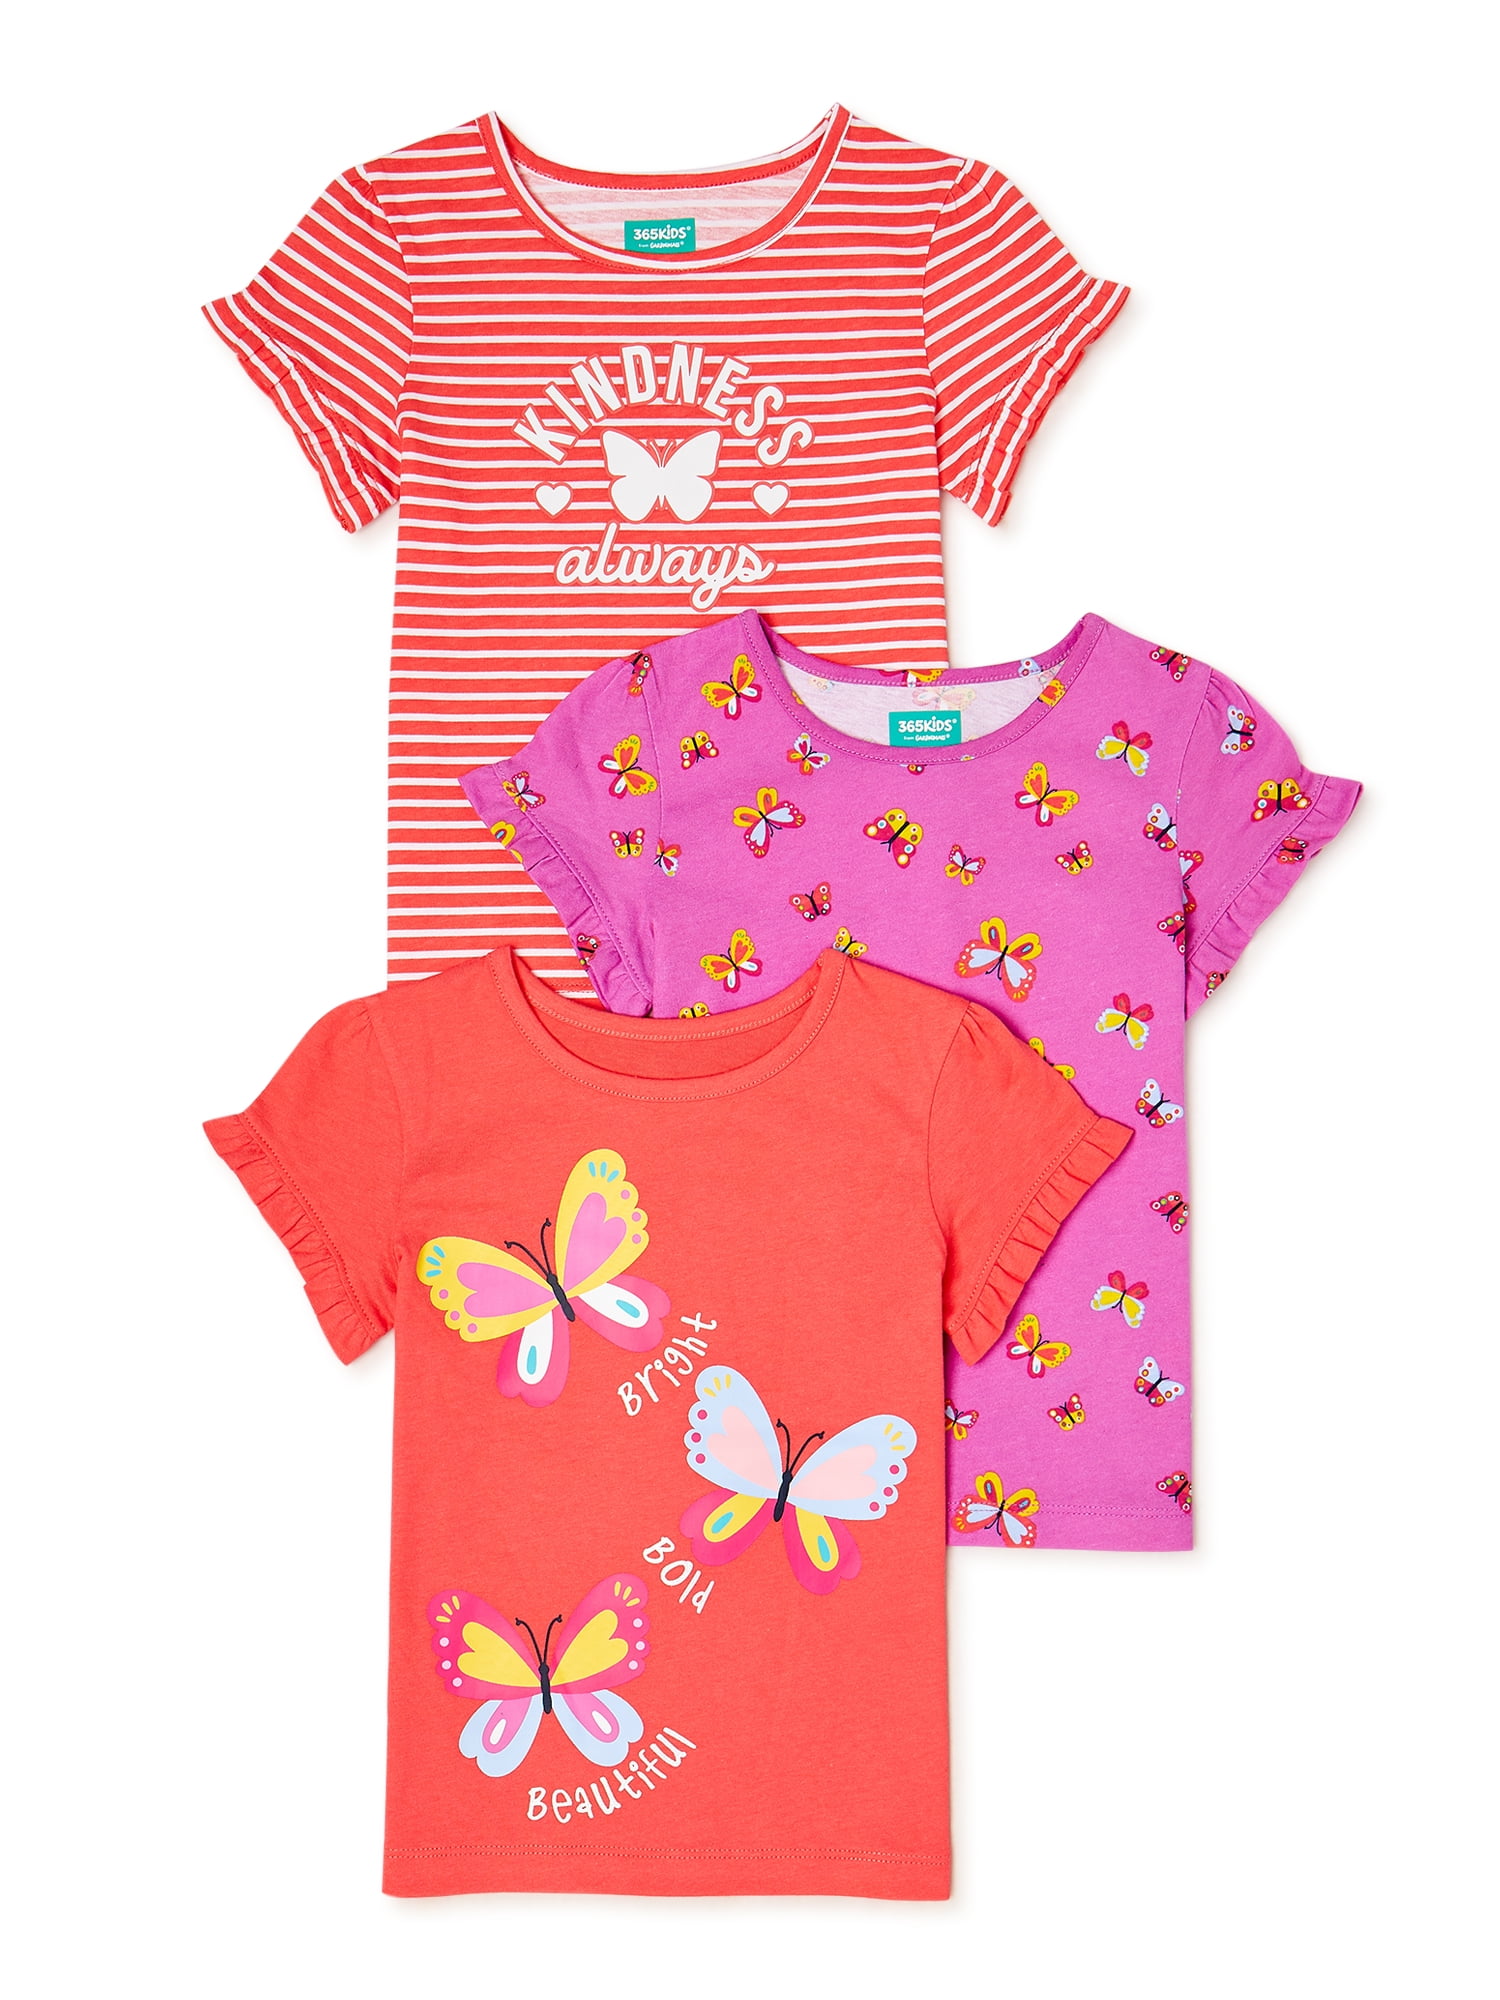 H M Girls Infant Top T Shirt w/ Stripes Kitty Cat Bird Spring Size 12-18 Months 